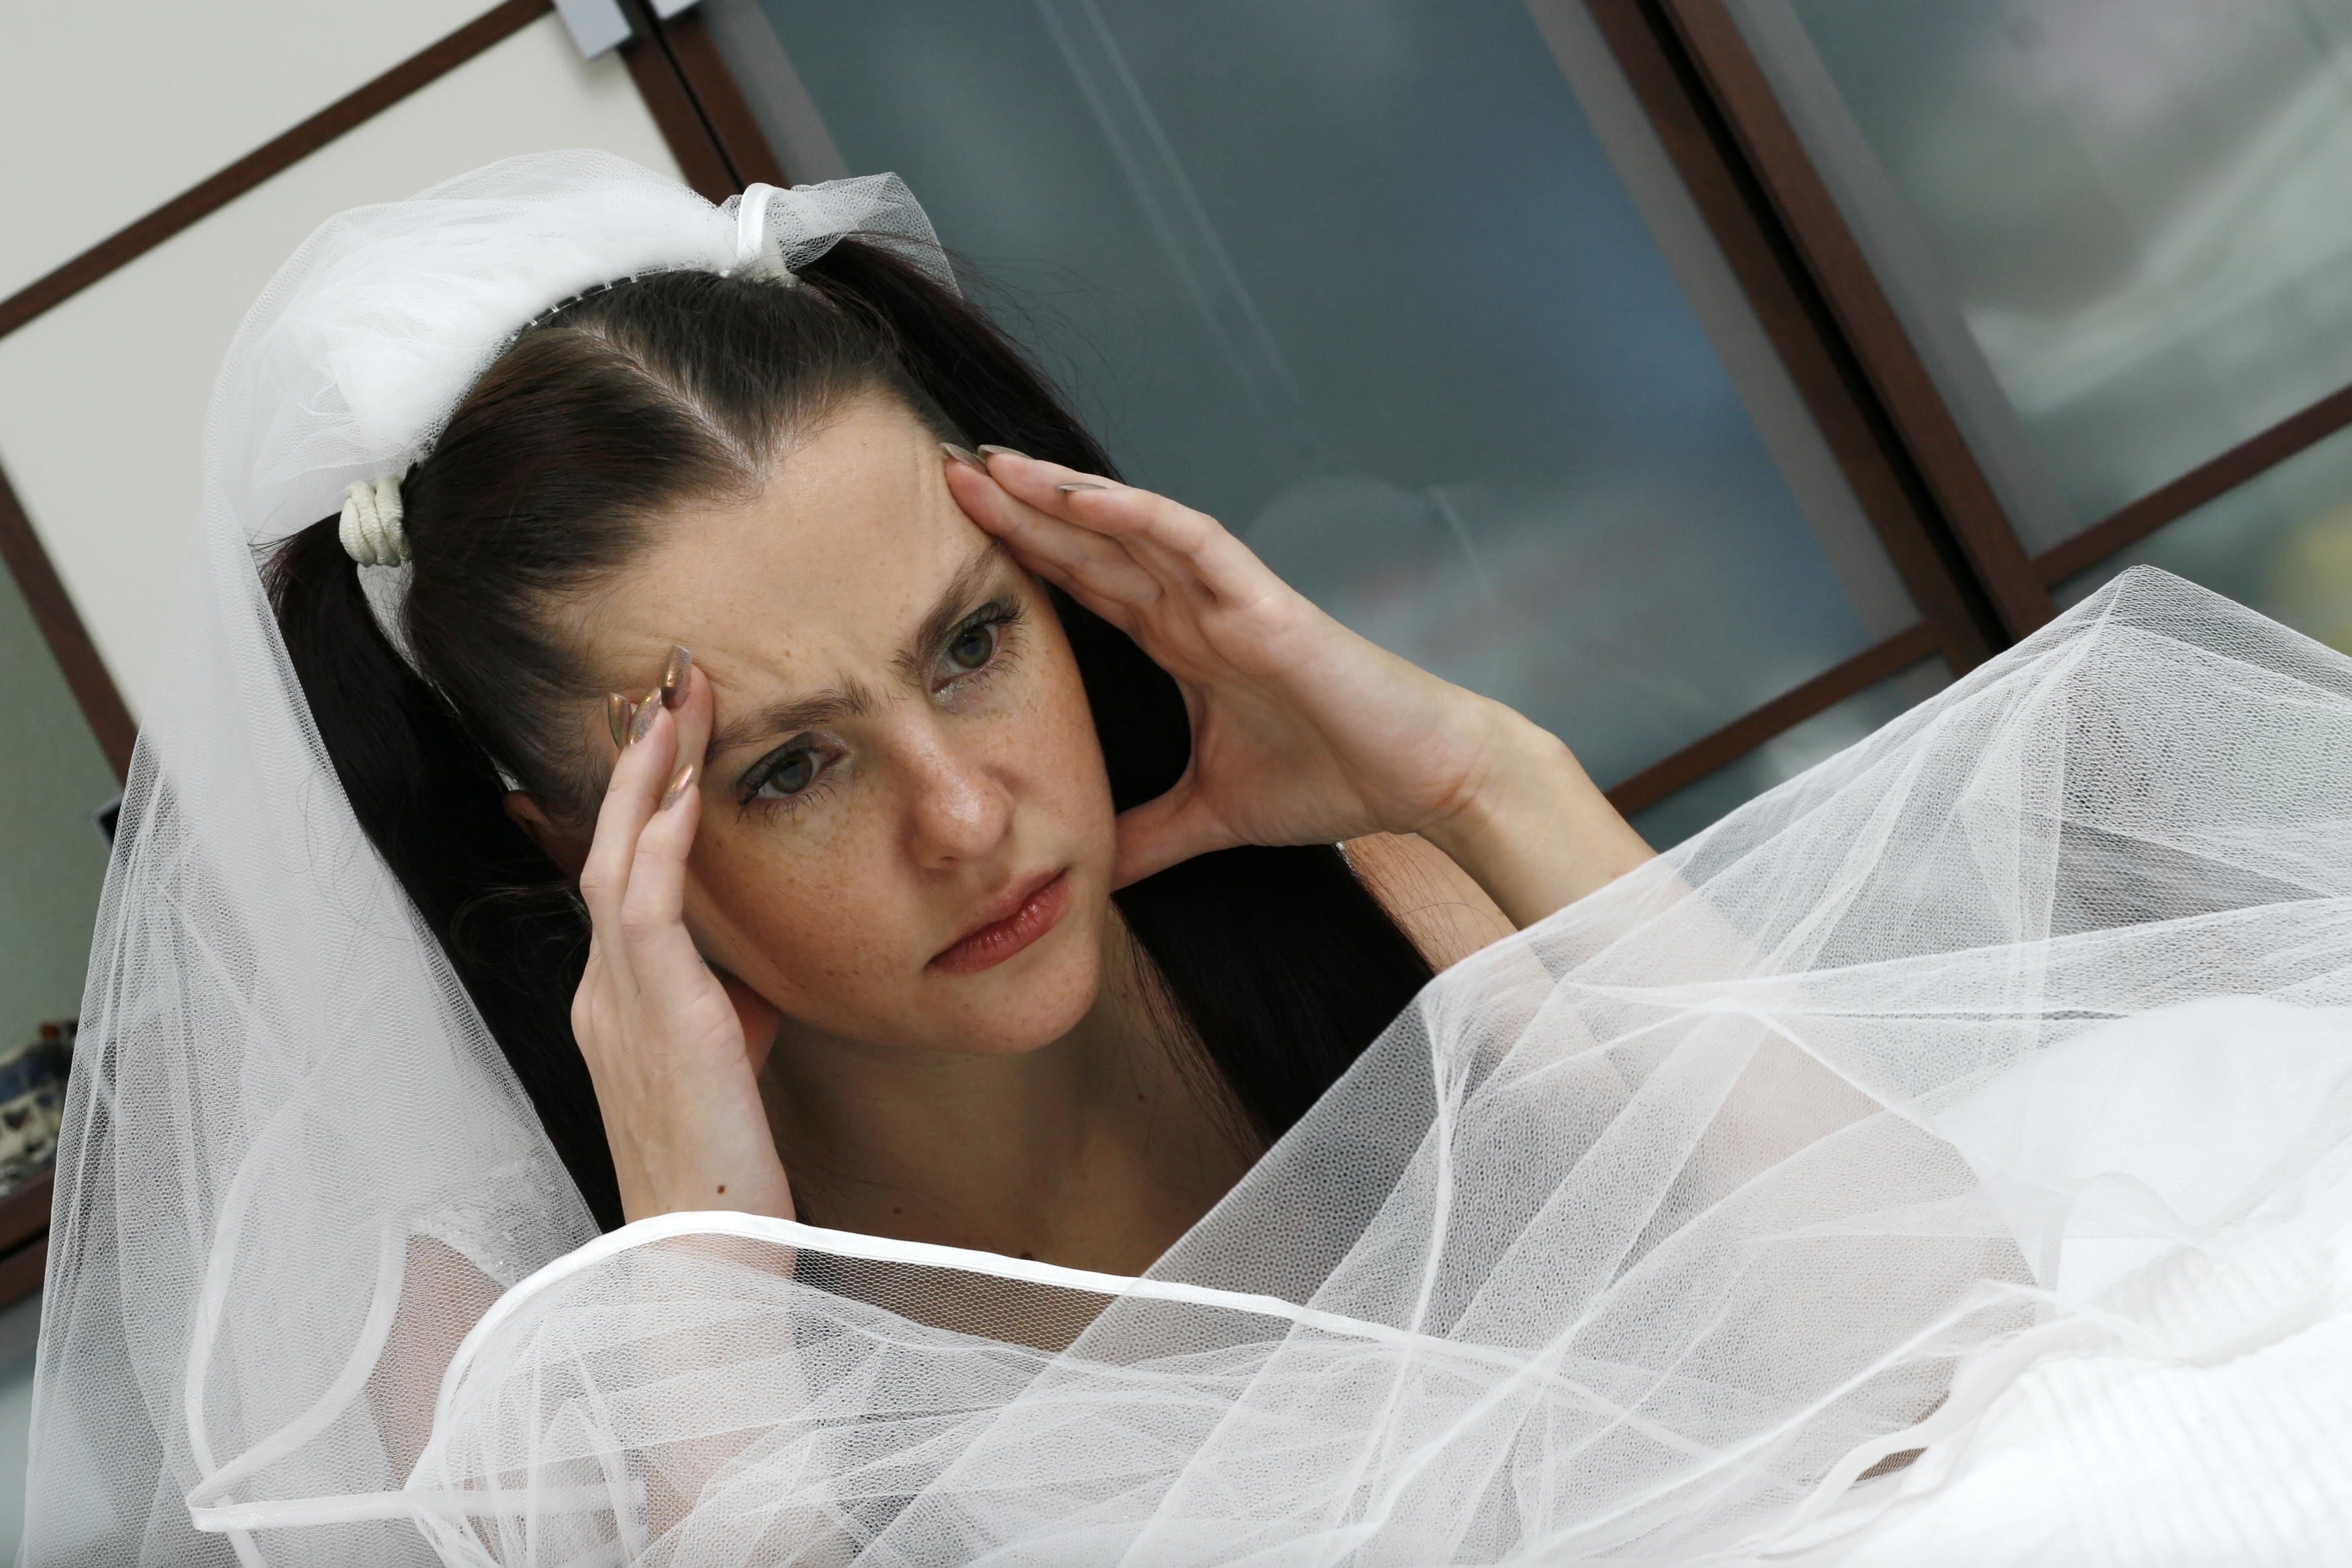 Bride Ripped for Wedding Meltdown Over Husband’s Pregnant Sister